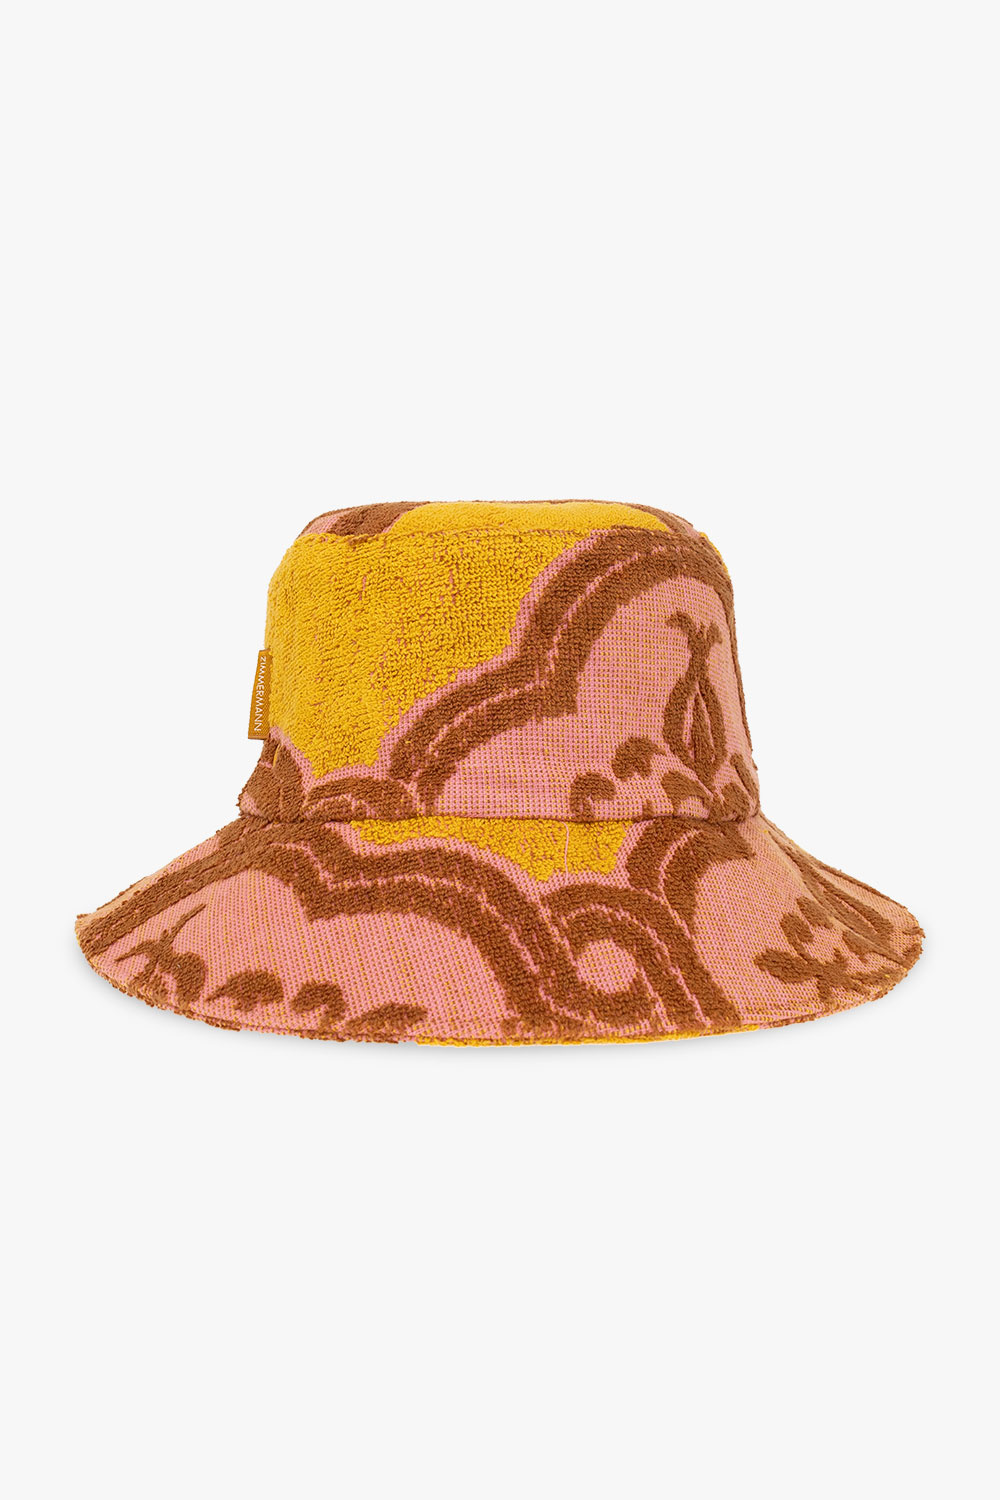 Zimmermann Bucket Boy hat with jacquard pattern